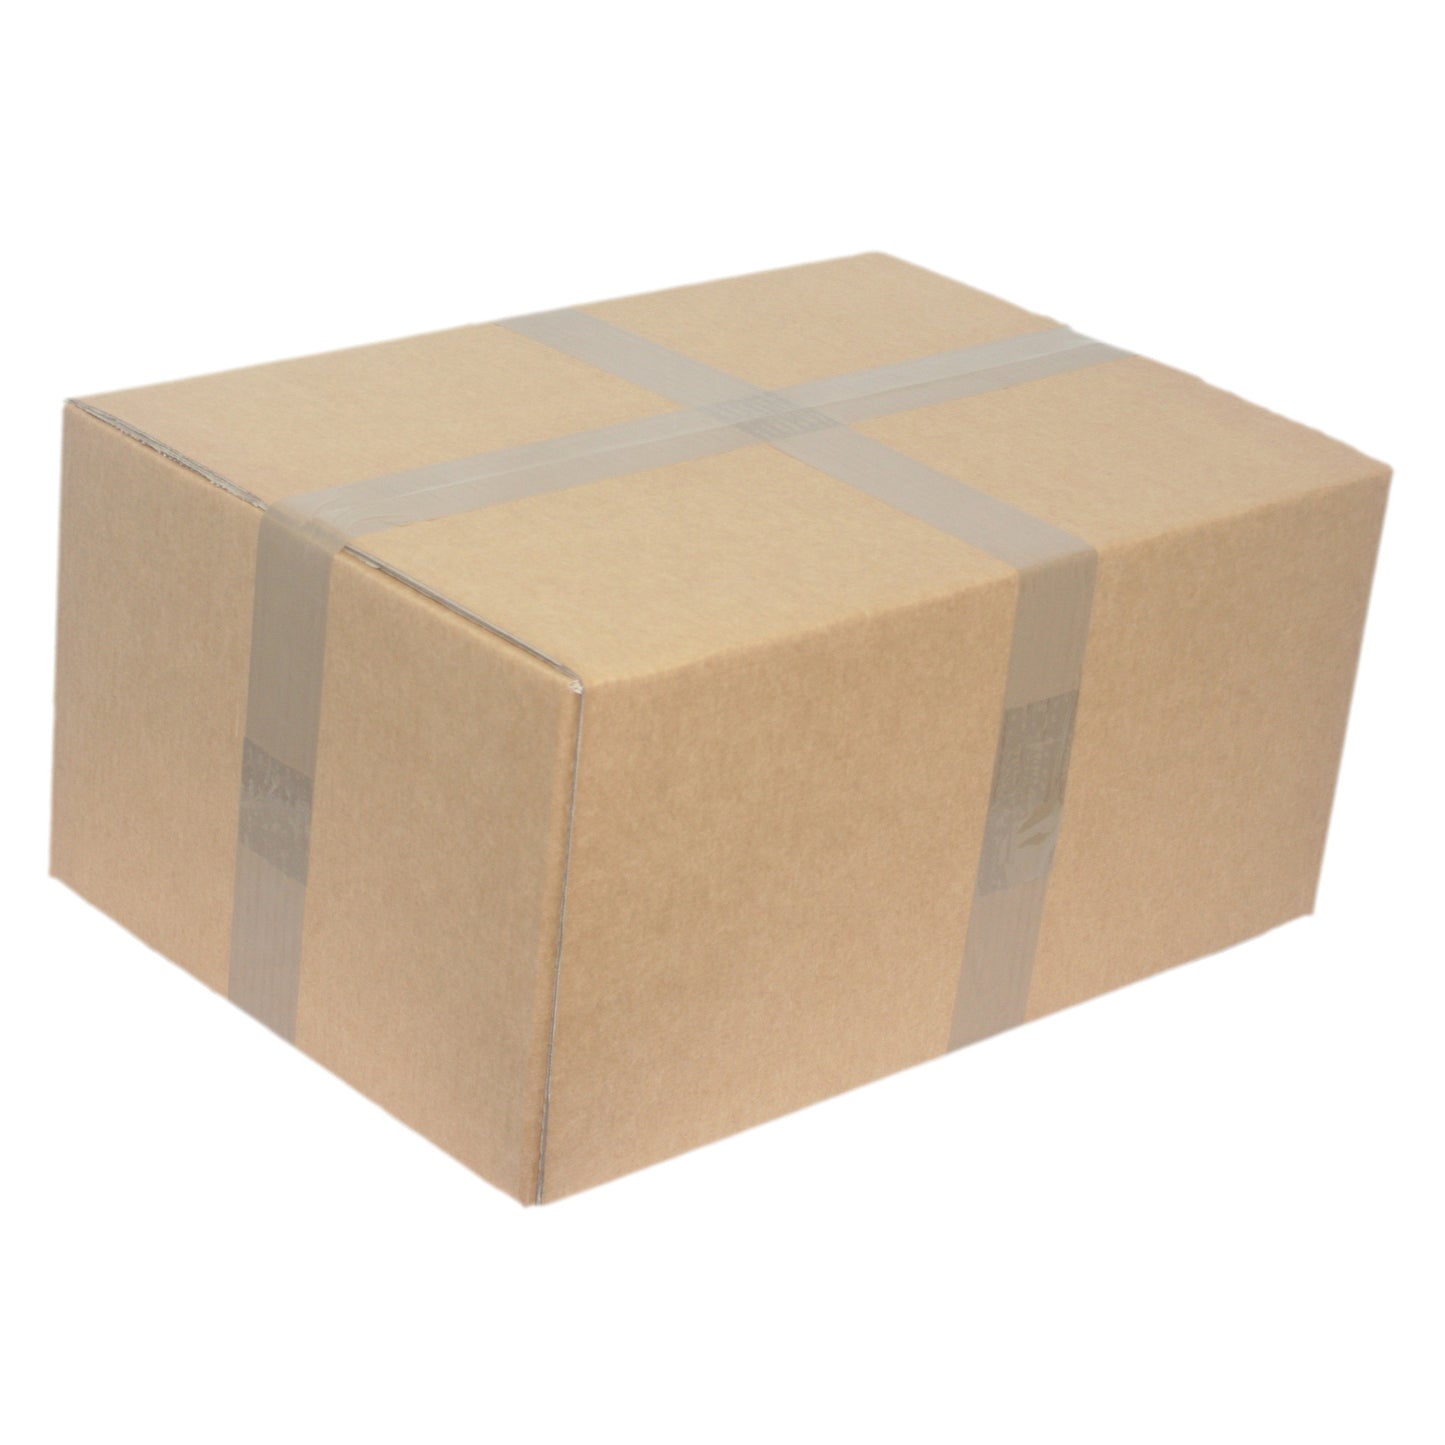 18 Inch Shipping Carton